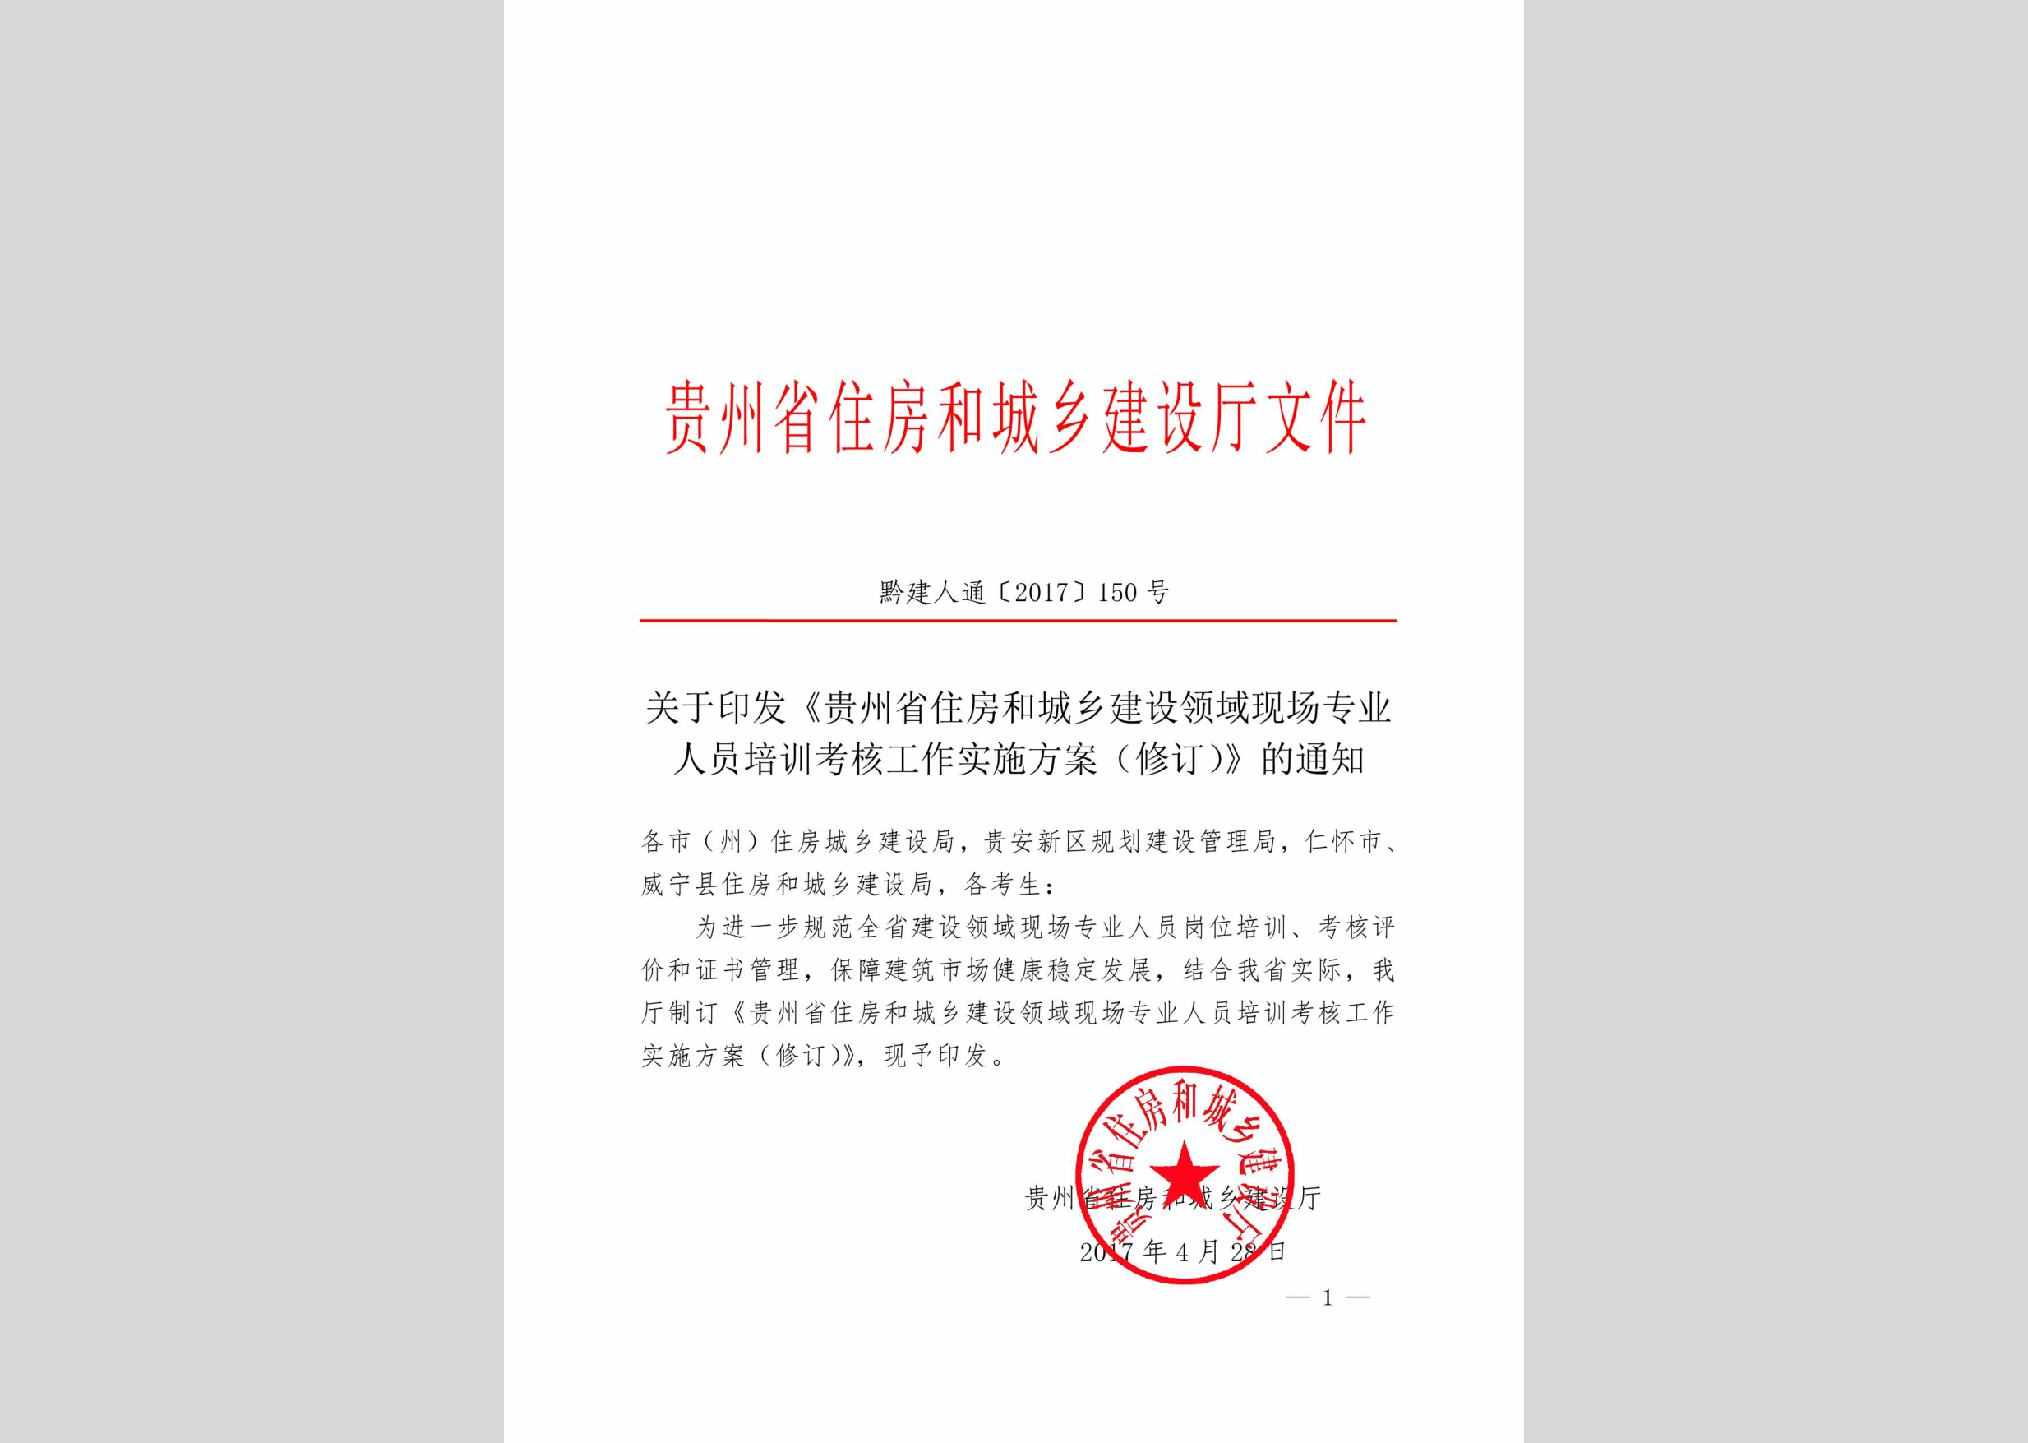 GZQJRT-2017-150：关于印发《贵州省住房和城市建设领域现场专业人员培训考核工作实施方案(修订)》的通知